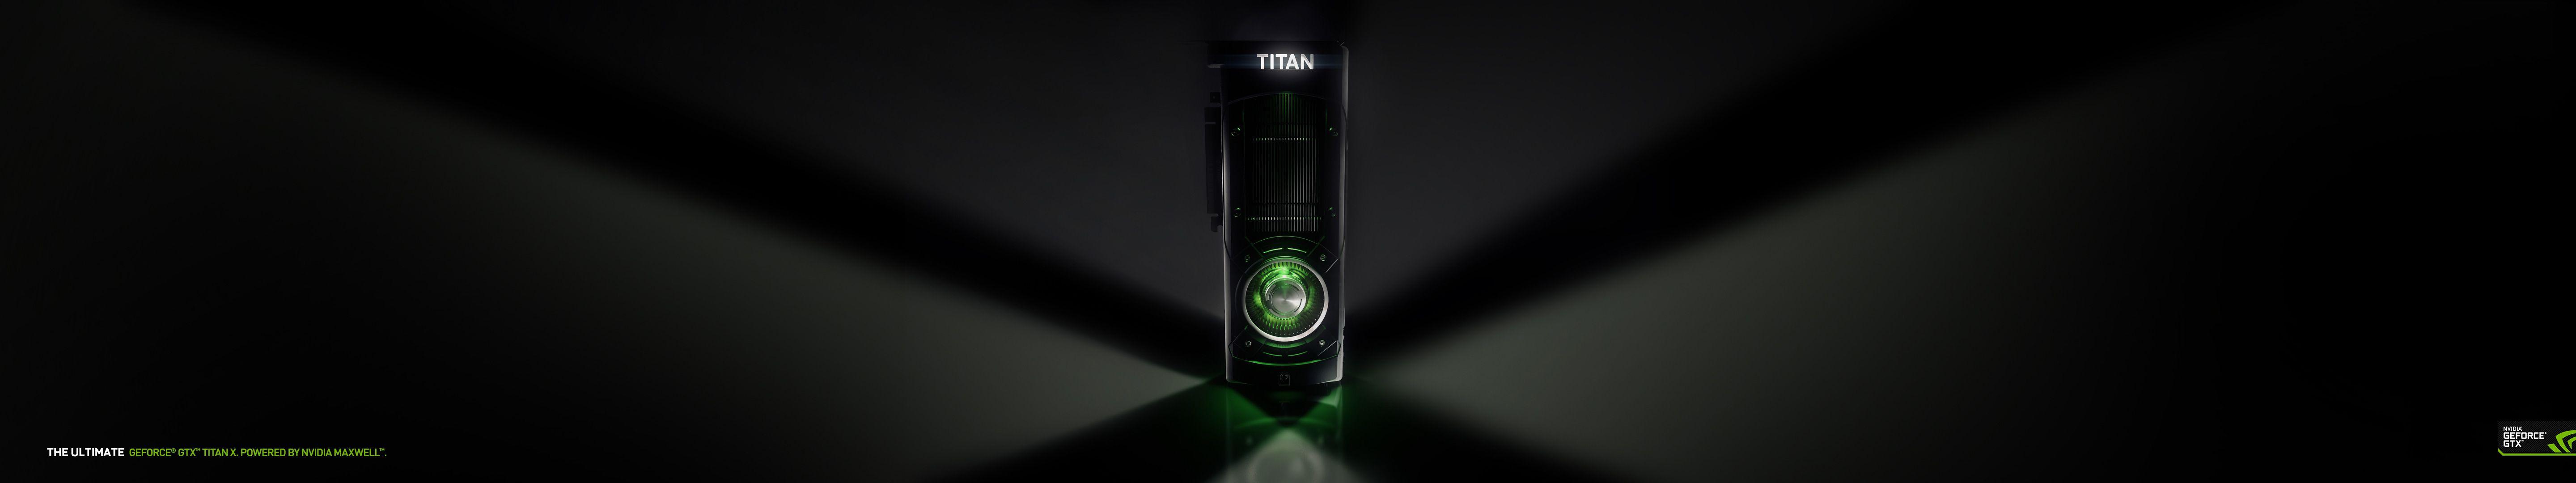 Download The GeForce GTX TITAN X Wallpaper